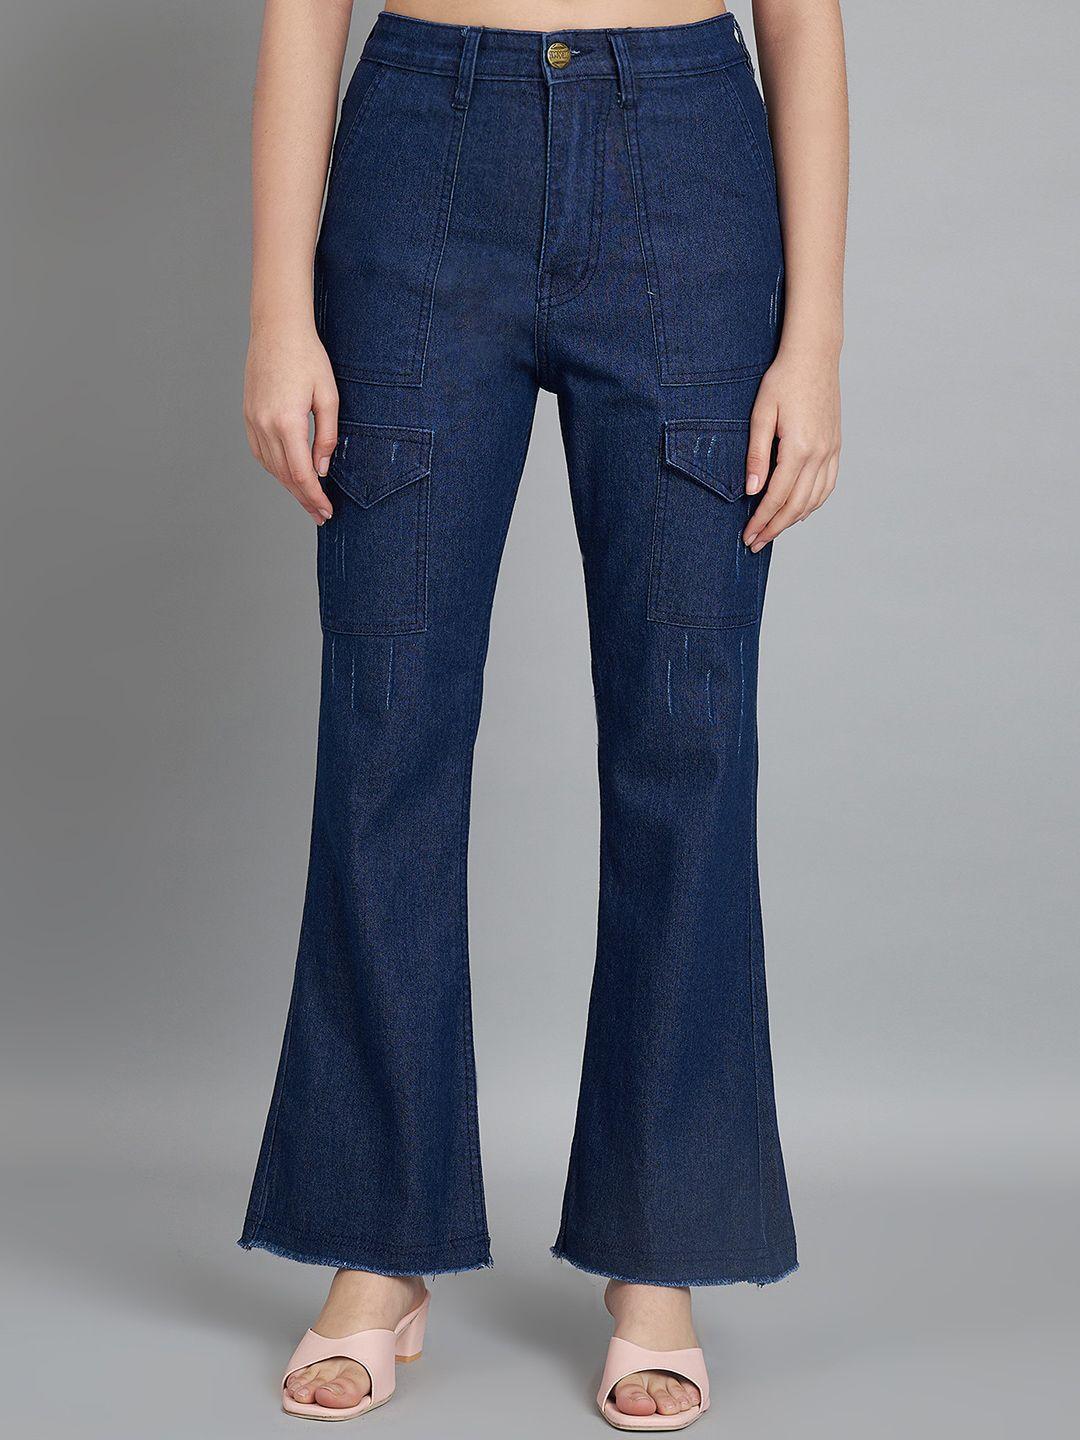 angelfab-women-jean-bootcut-high-rise-light-fade-clean-look-cotton-jeans